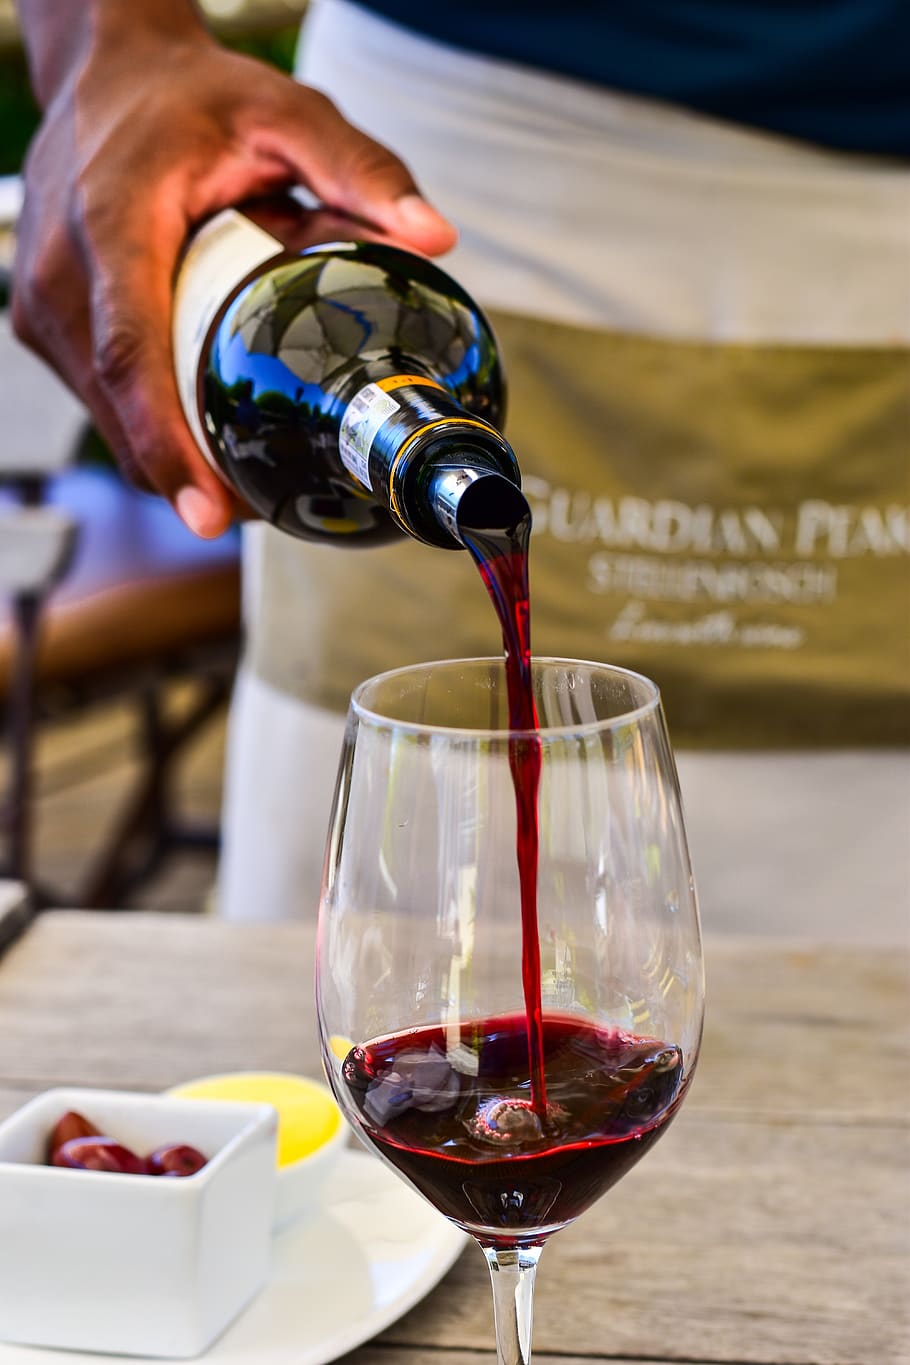 guardian peak winery, wine, alcohol, drink, glass, bottle, pour, serve, wineglass, winery